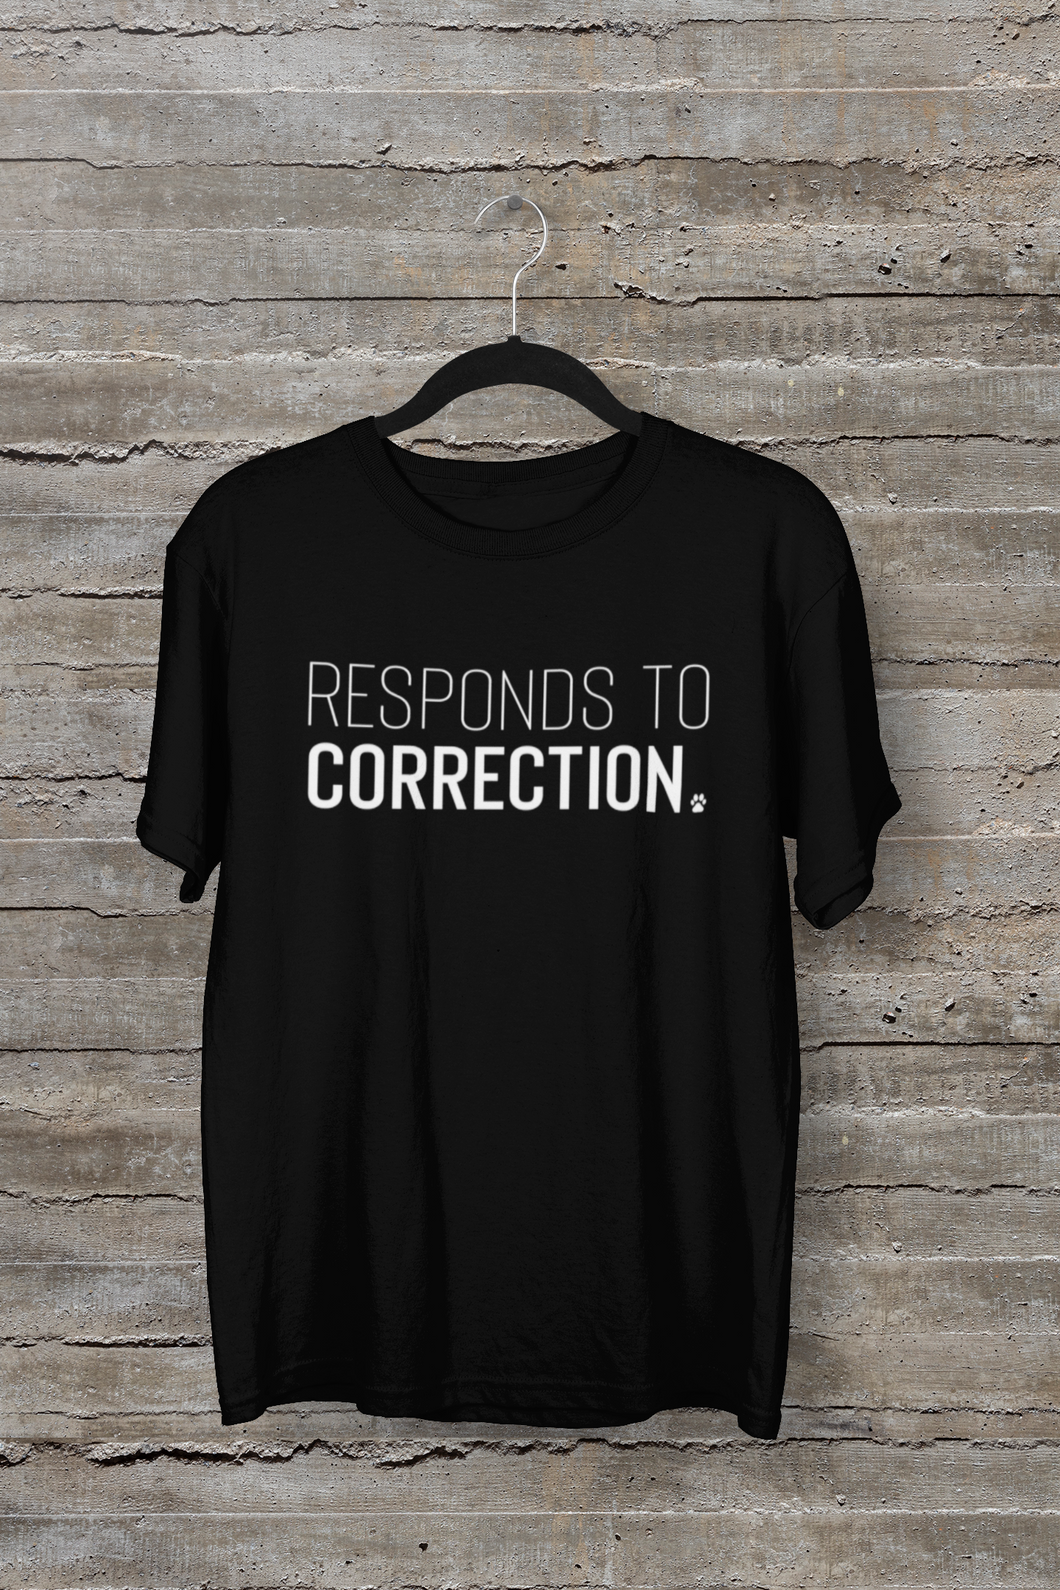 Responds to Correction Men's/Unisex or Women's T-shirt